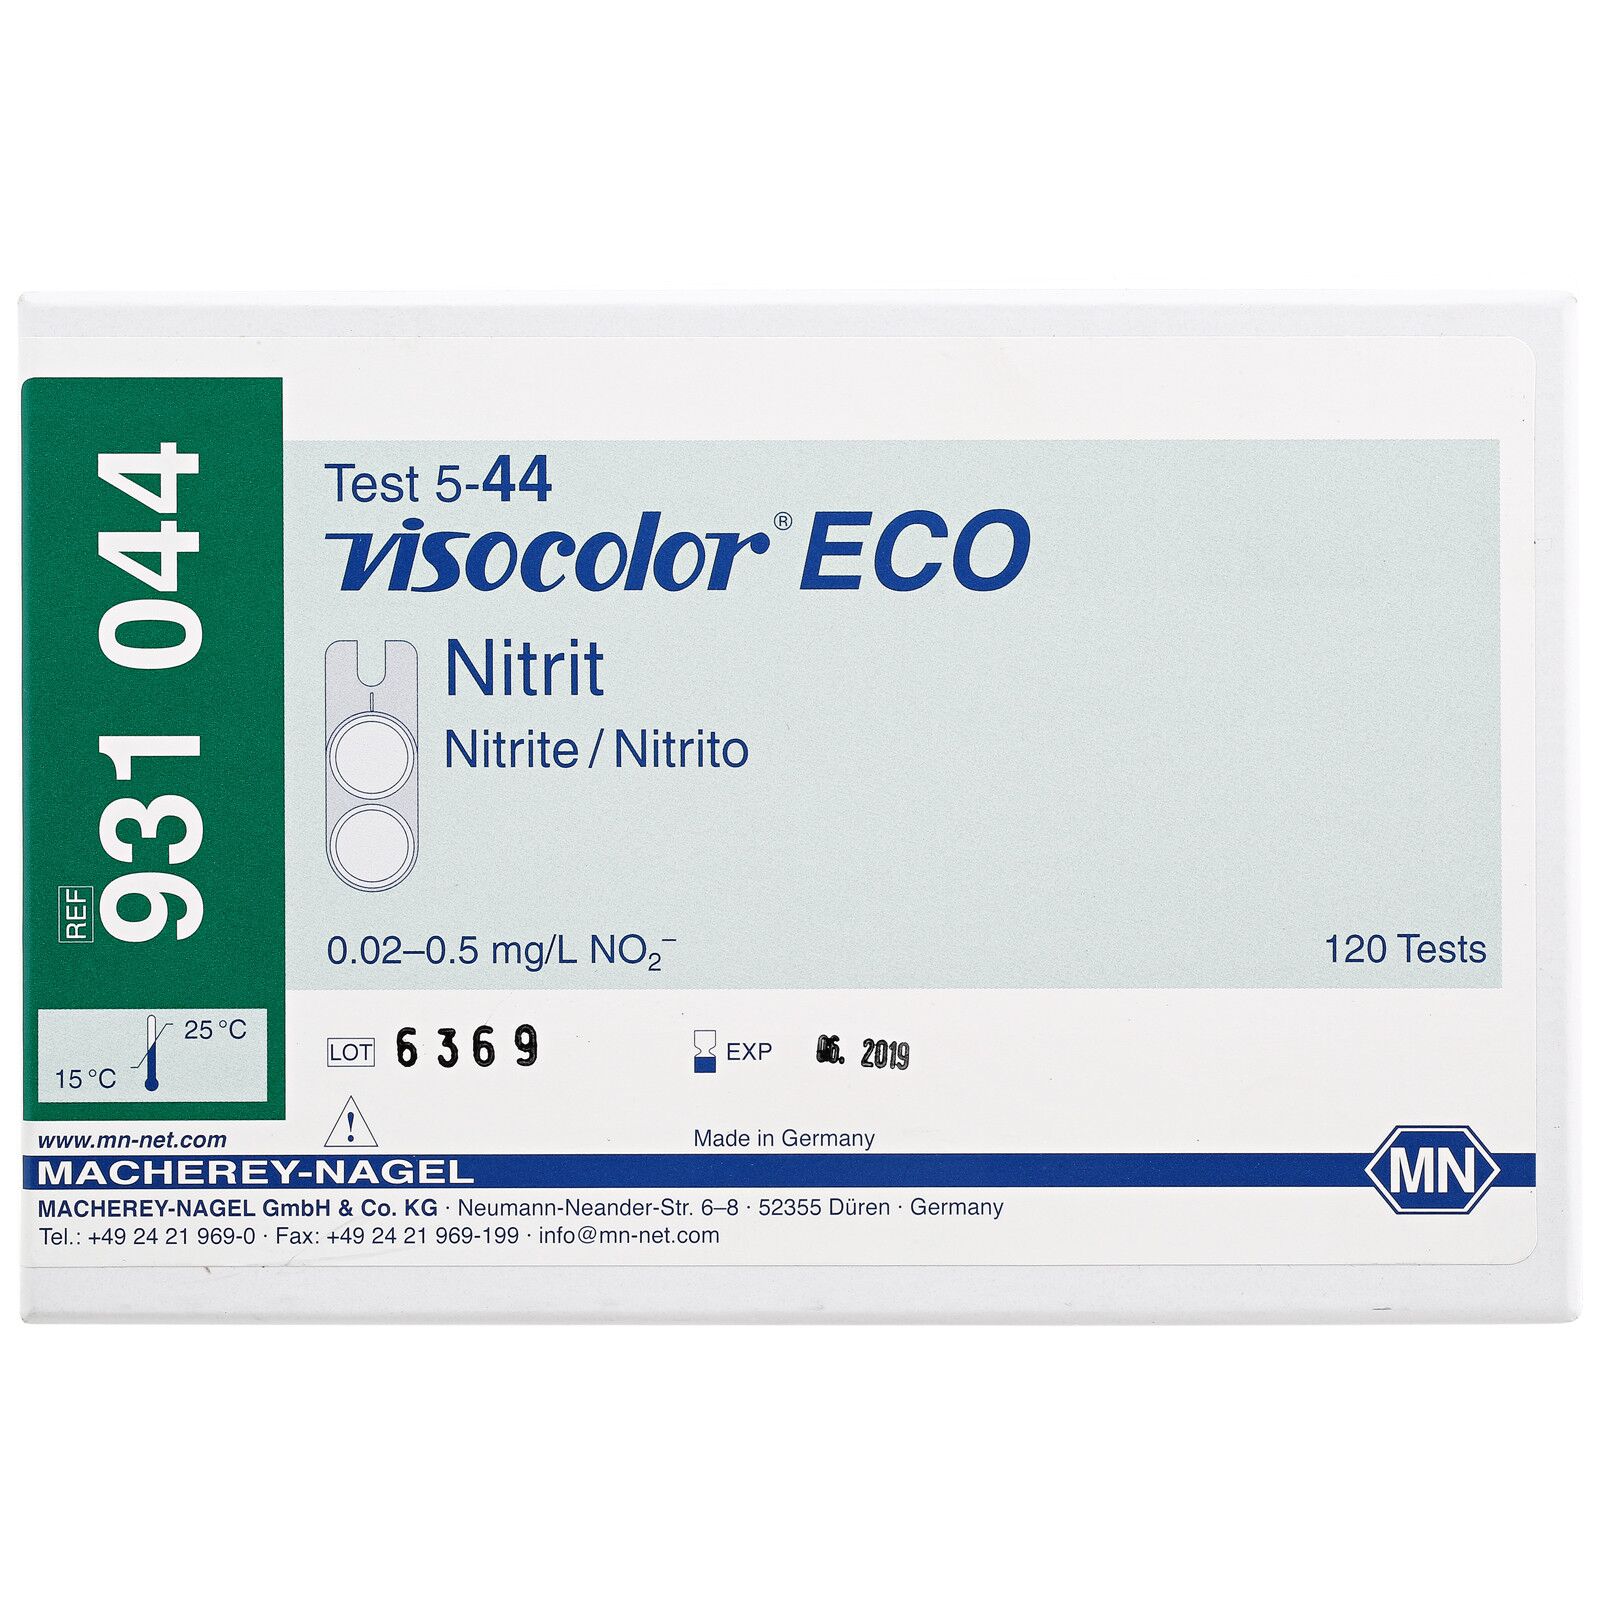 Macherey-Nagel - Visocolor ECO - Nitrite